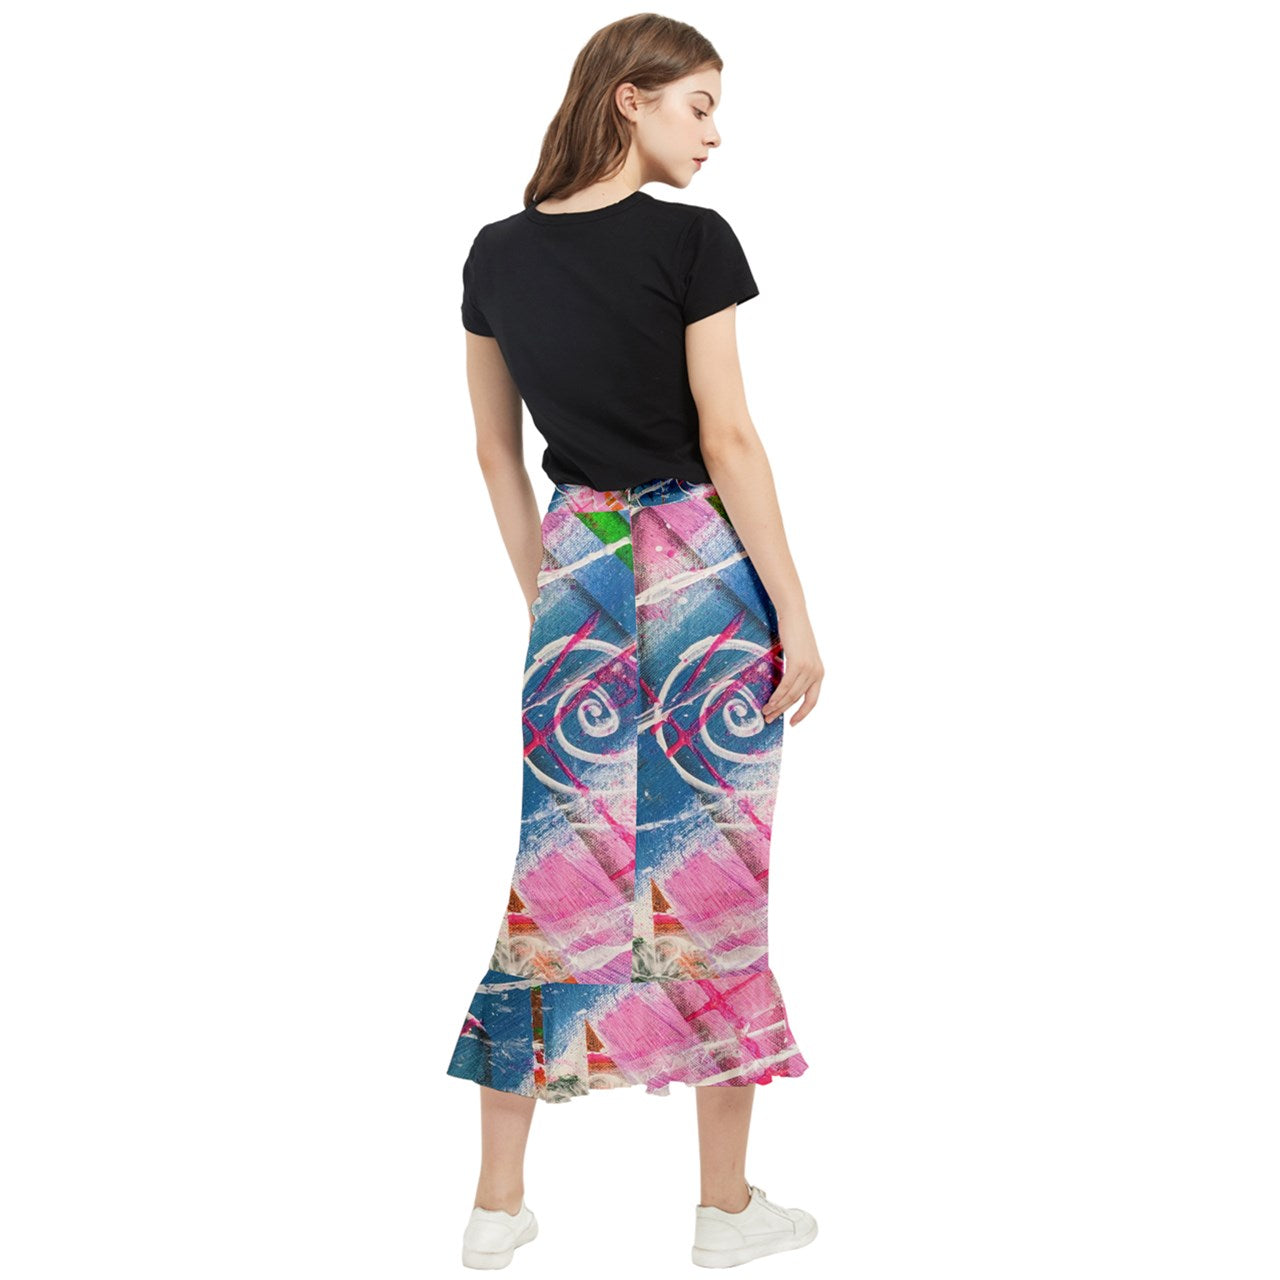 Gavin Scott Maxi ICONIC Fishtail Chiffon Skirt (Femme XS-5XL)